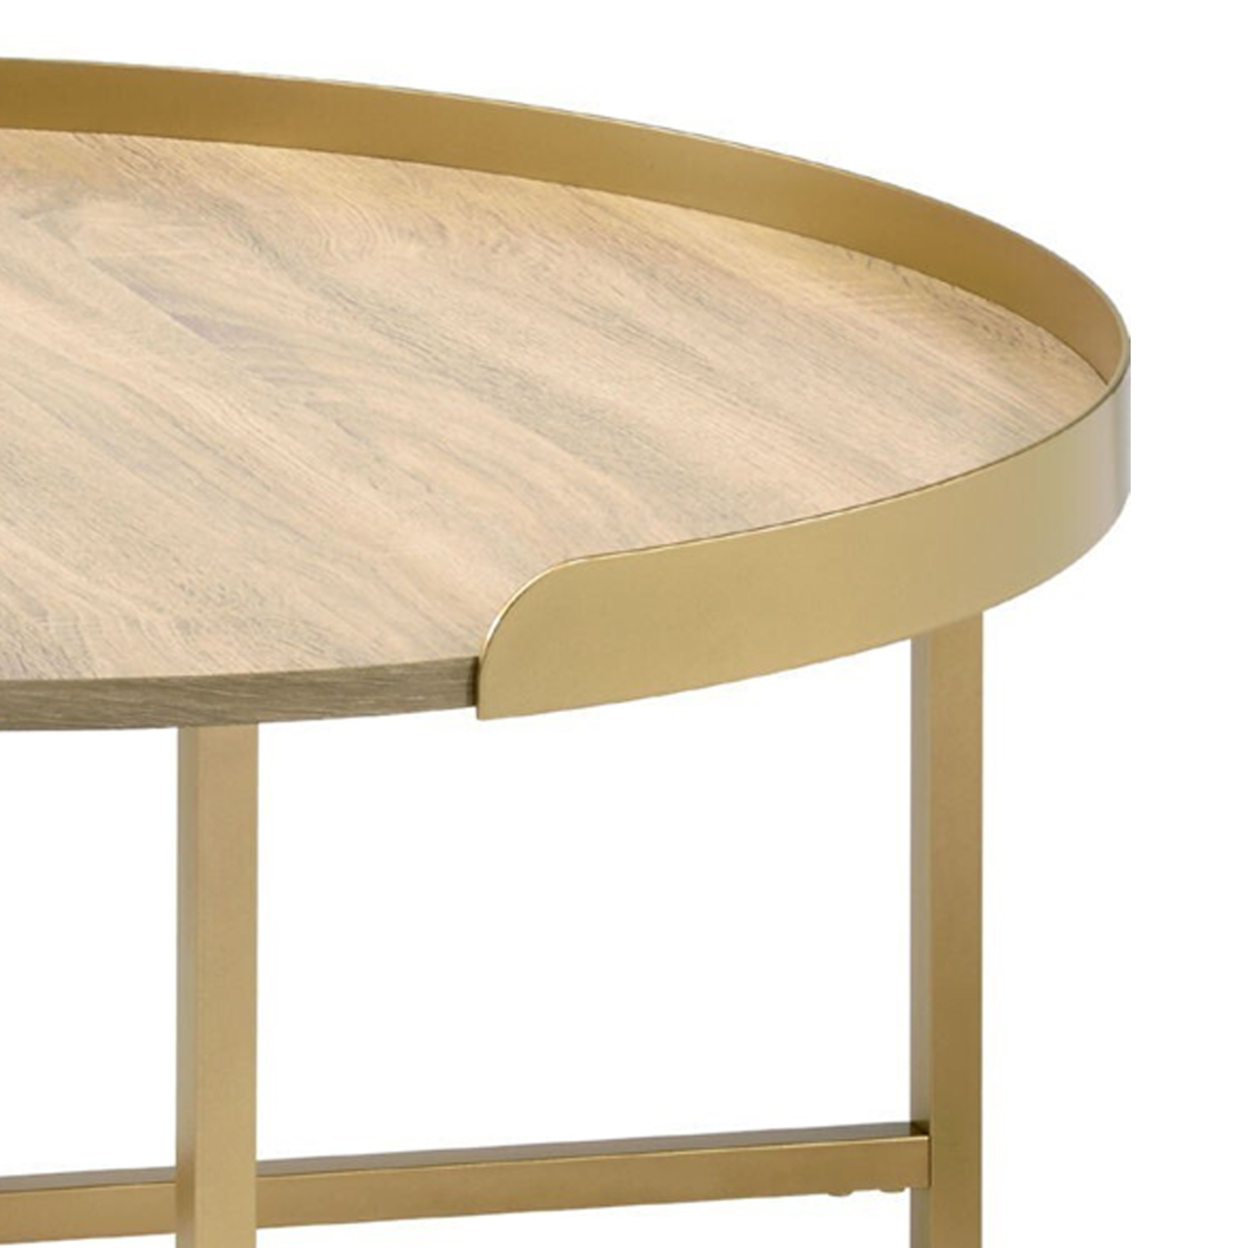 Kai 34 Inch Wood Coffee Table, Round Tray Top, Metal Accent, Brown, Brass- Saltoro Sherpi